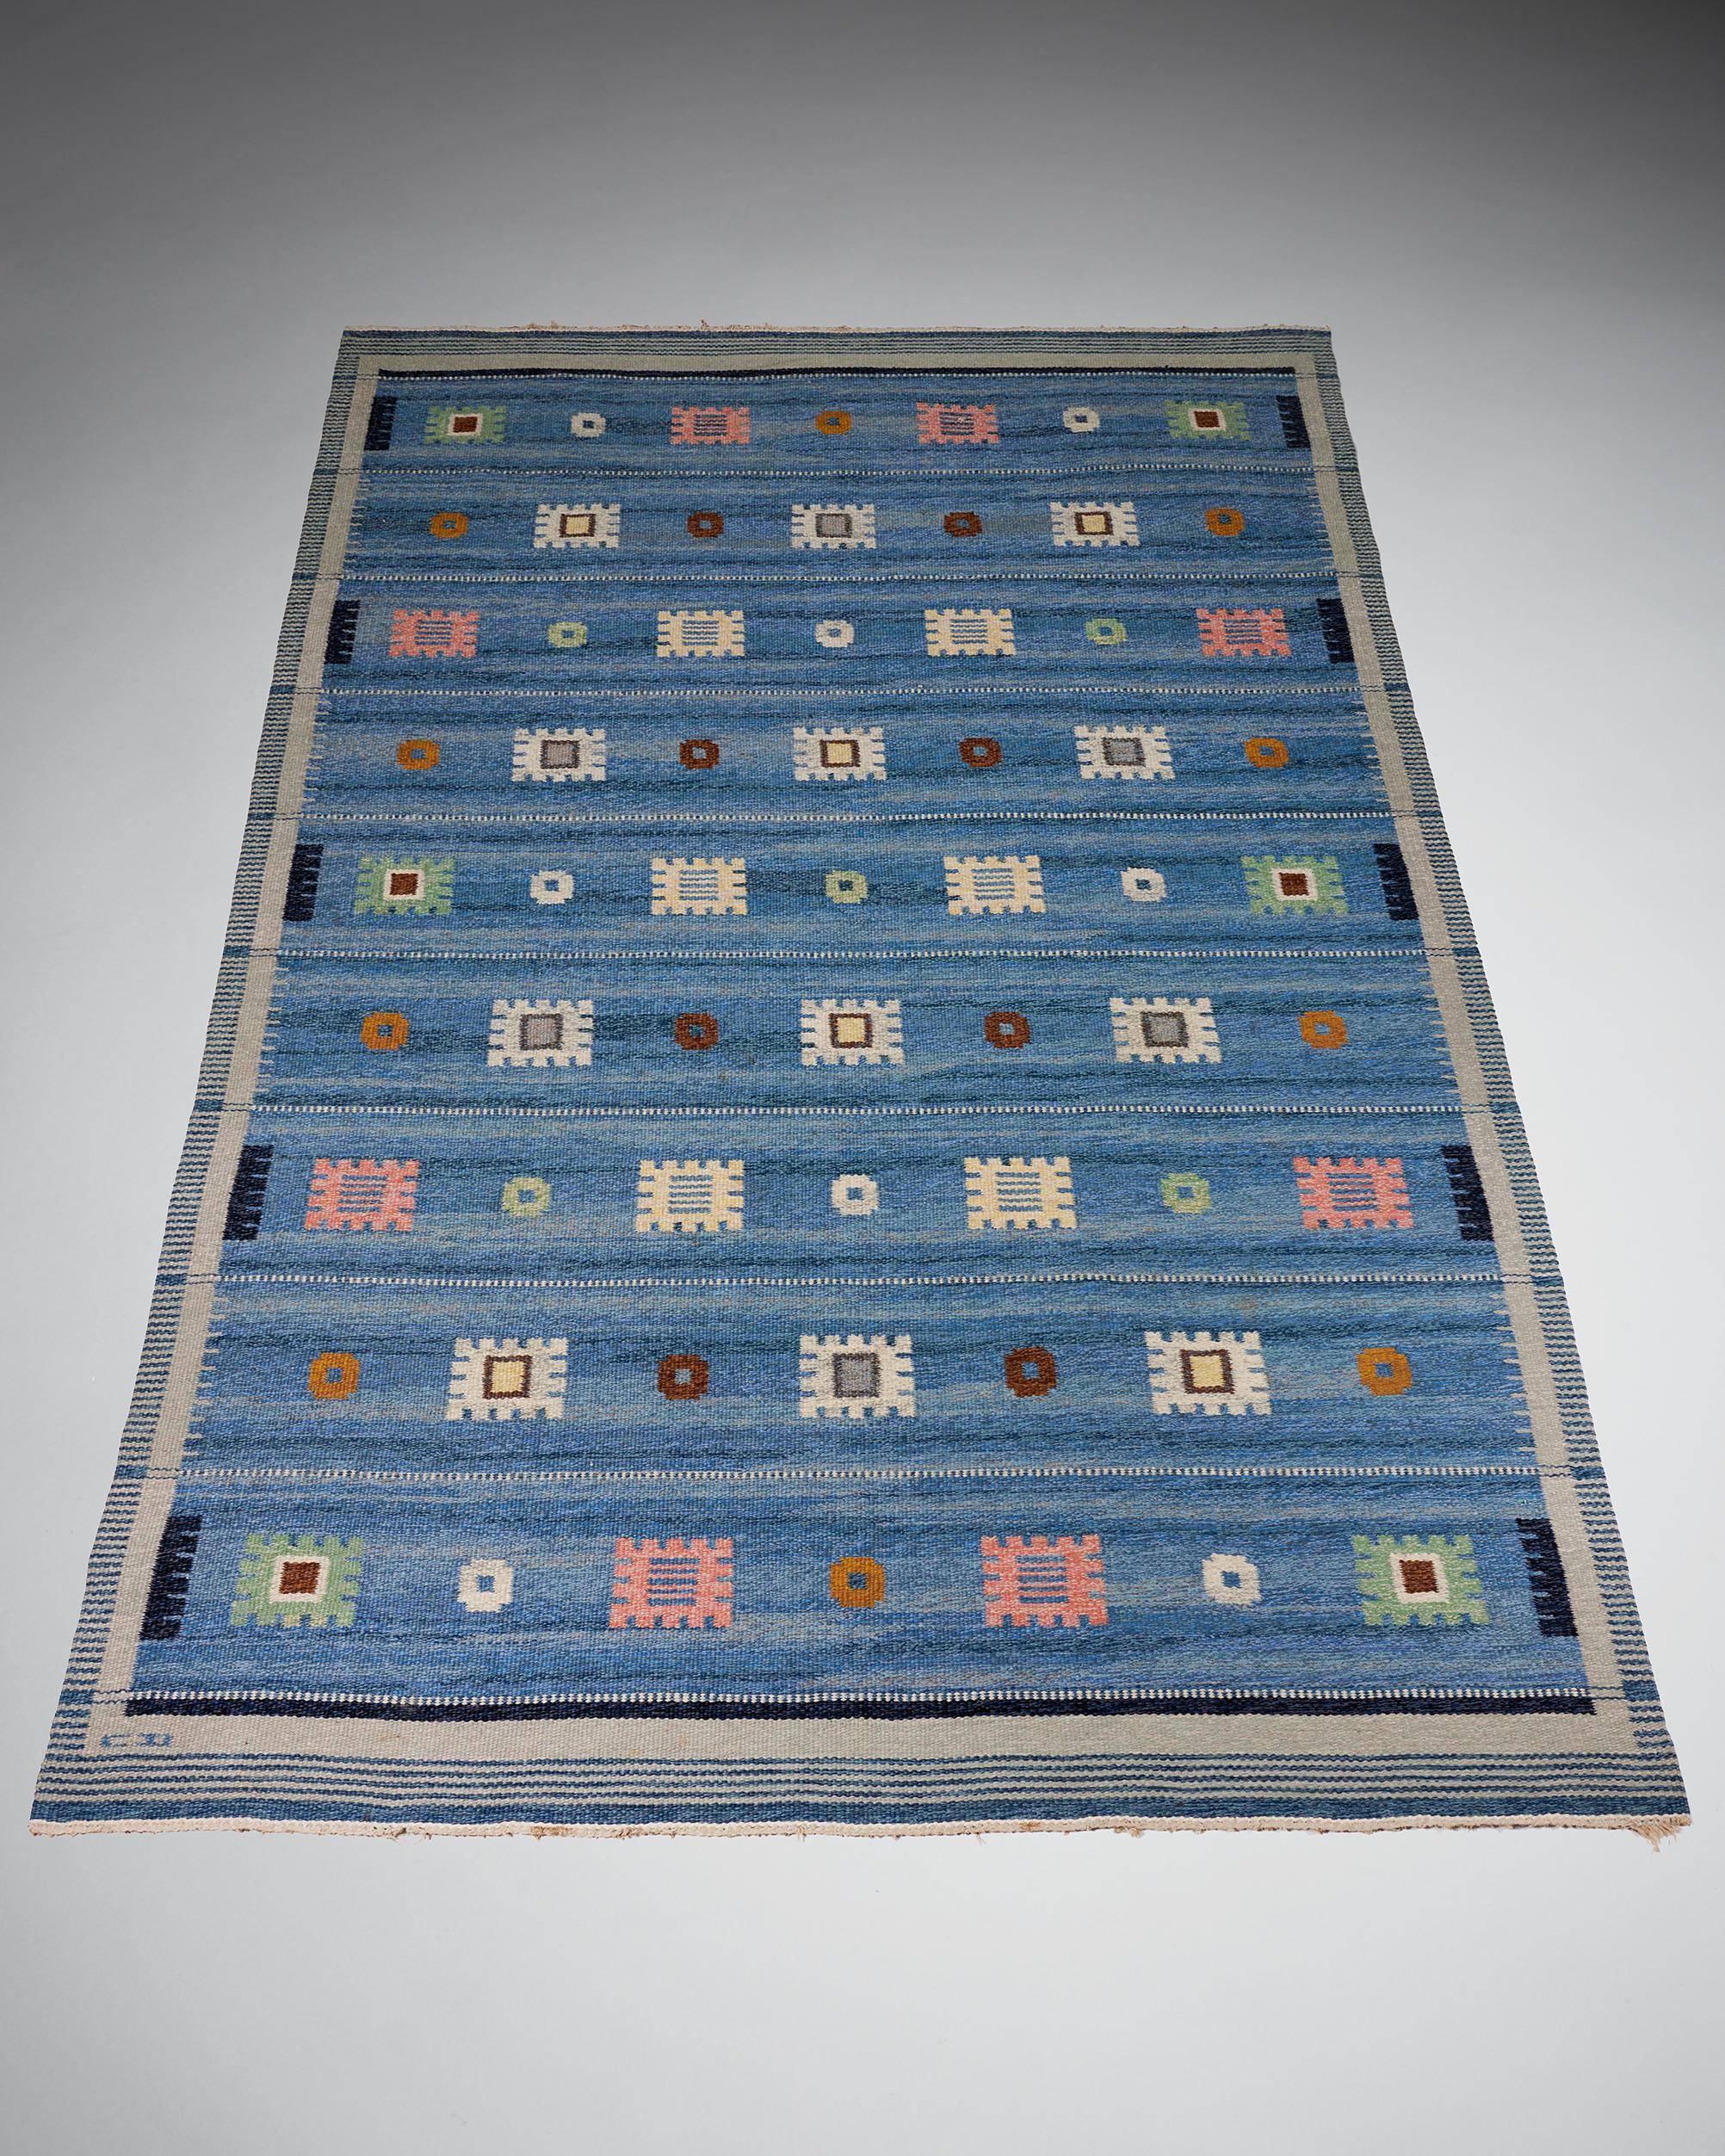 Rug designed by Carl Dangel,
Sweden, 1950s.

Handwoven wool carpet in Rölakan flatweave technique.

Signed.

Dimensions: 
L: 304 cm / 9’ 11 3/4’’
W: 197 cm / 6’ 5 1/2’’